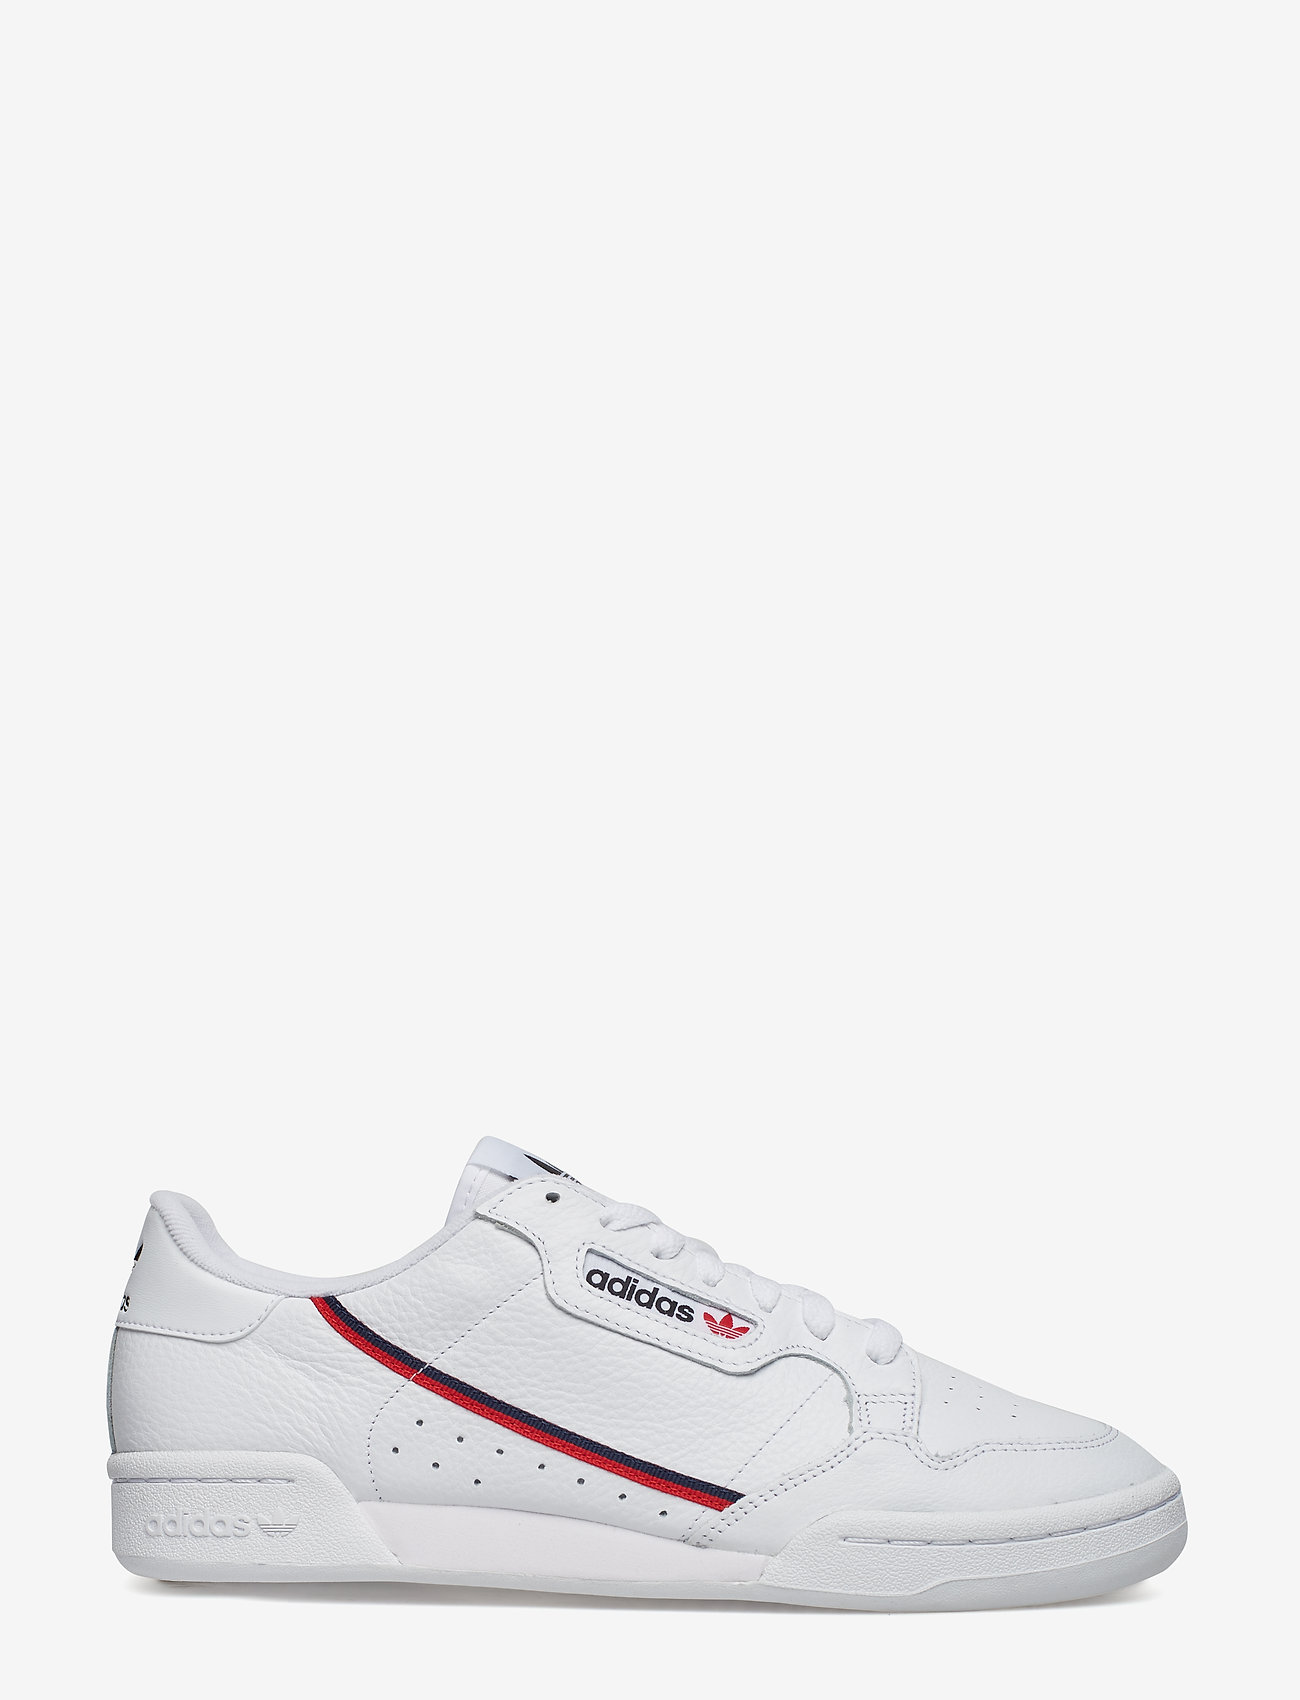 adidas Originals - Continental 80 Shoes - low top sneakers - ftwwht/scarle/conavy - 1